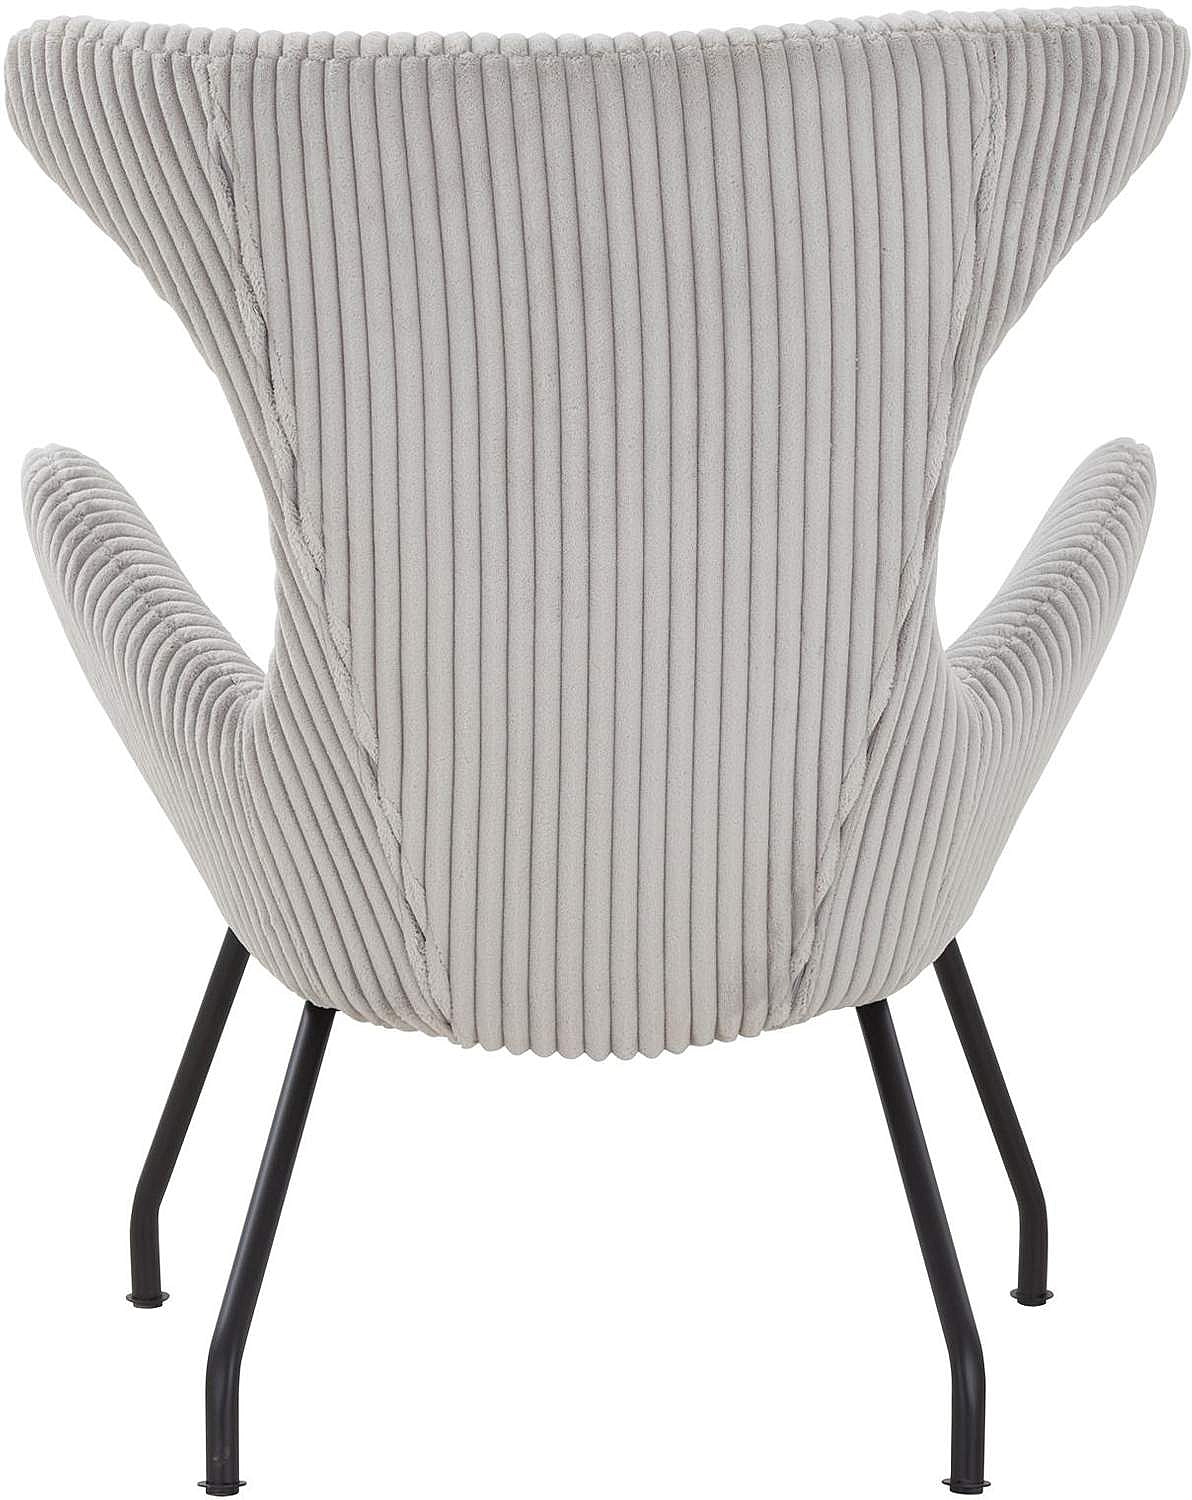 SalesFever Relaxsessel Sessel mit Texturstoff Grau in